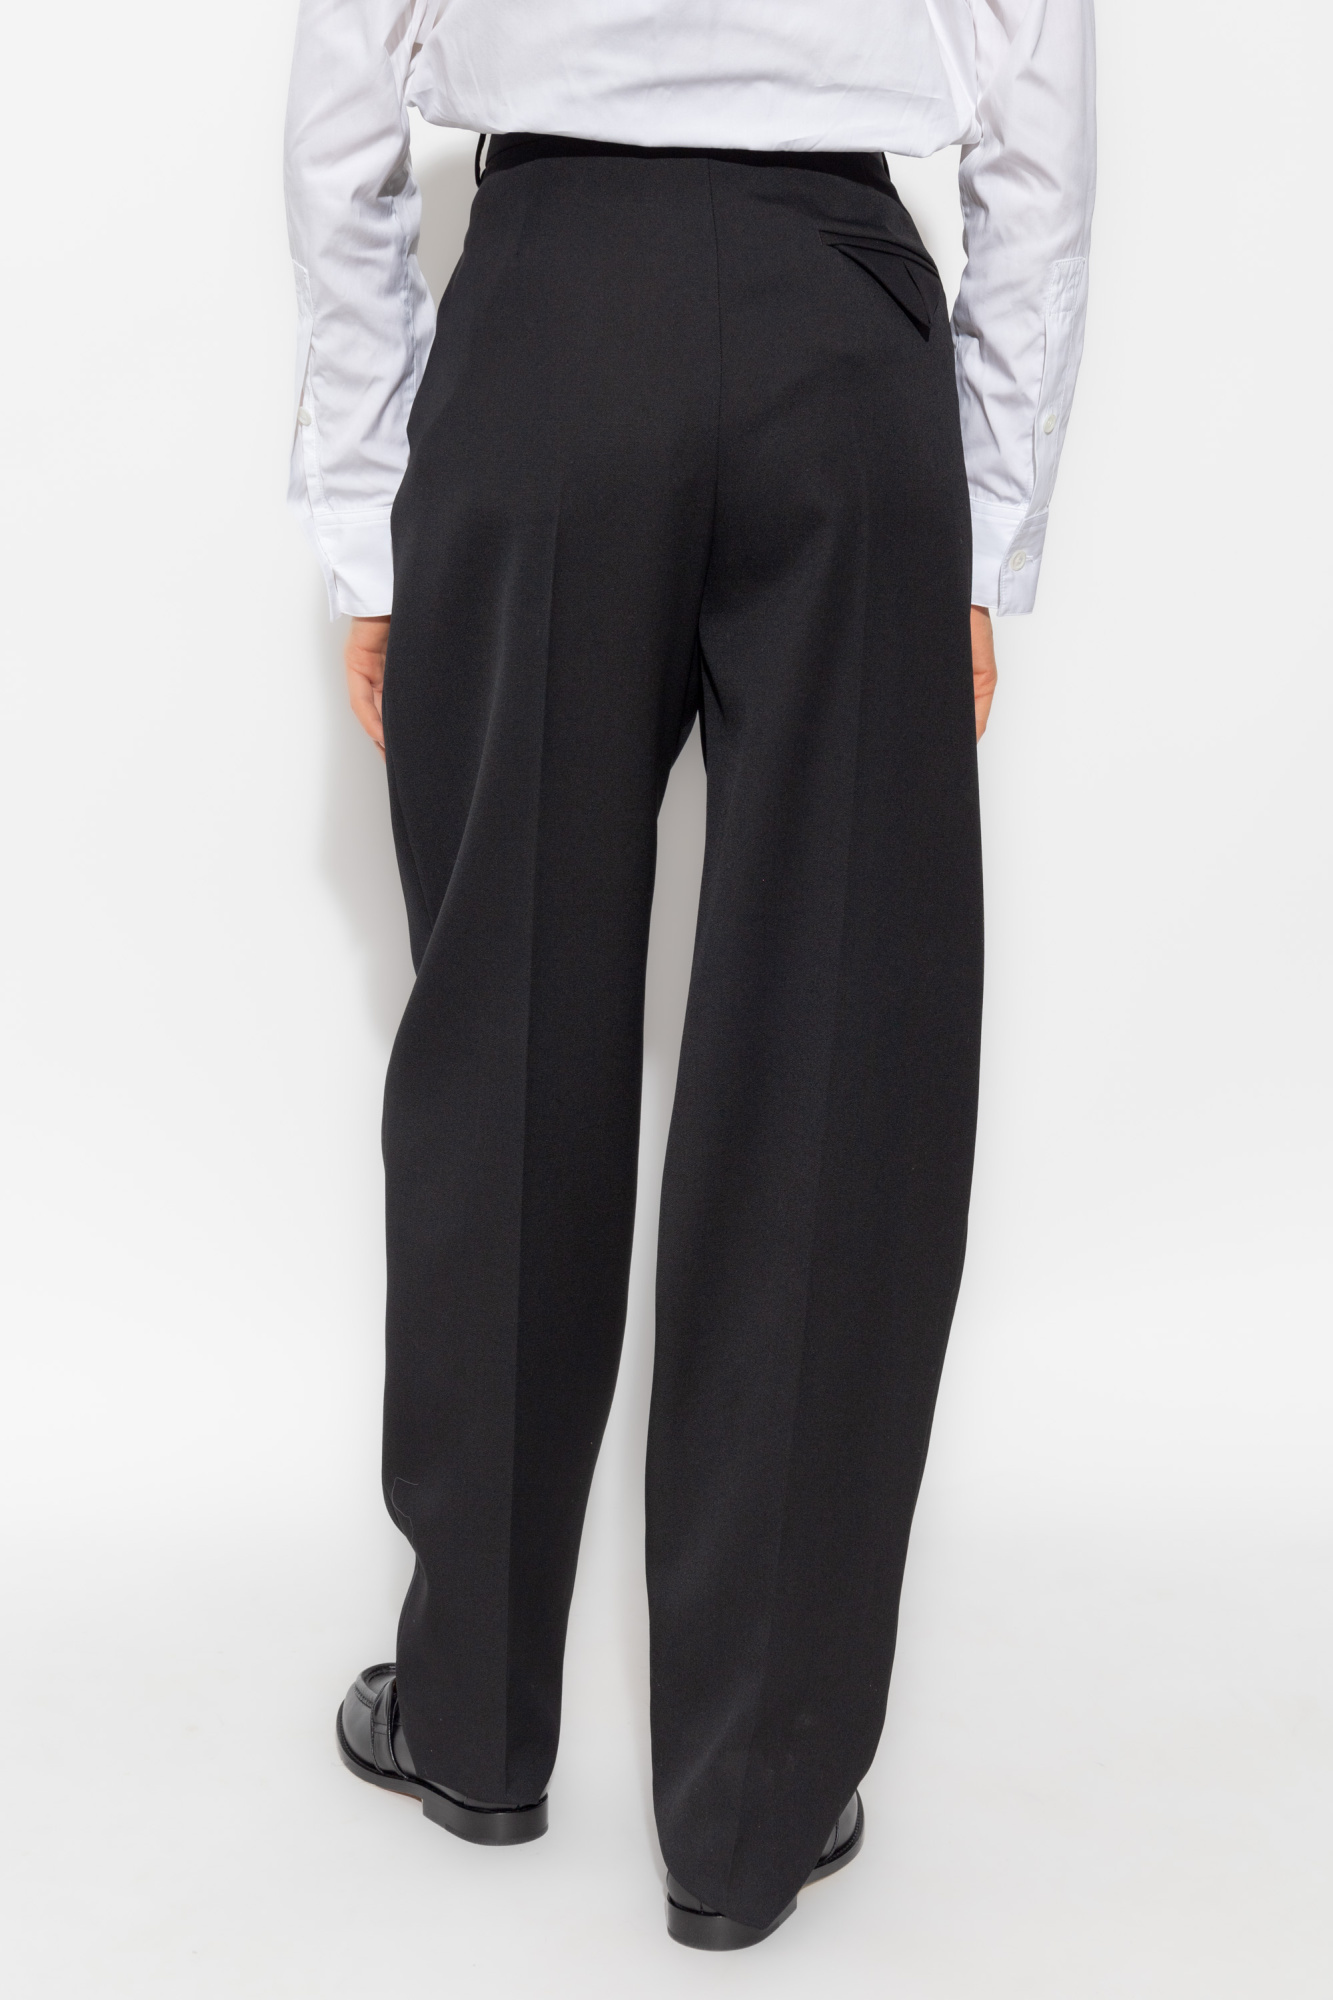 Bottega Veneta® Women's Curved Shape Wool Pants in Black. Shop online now.